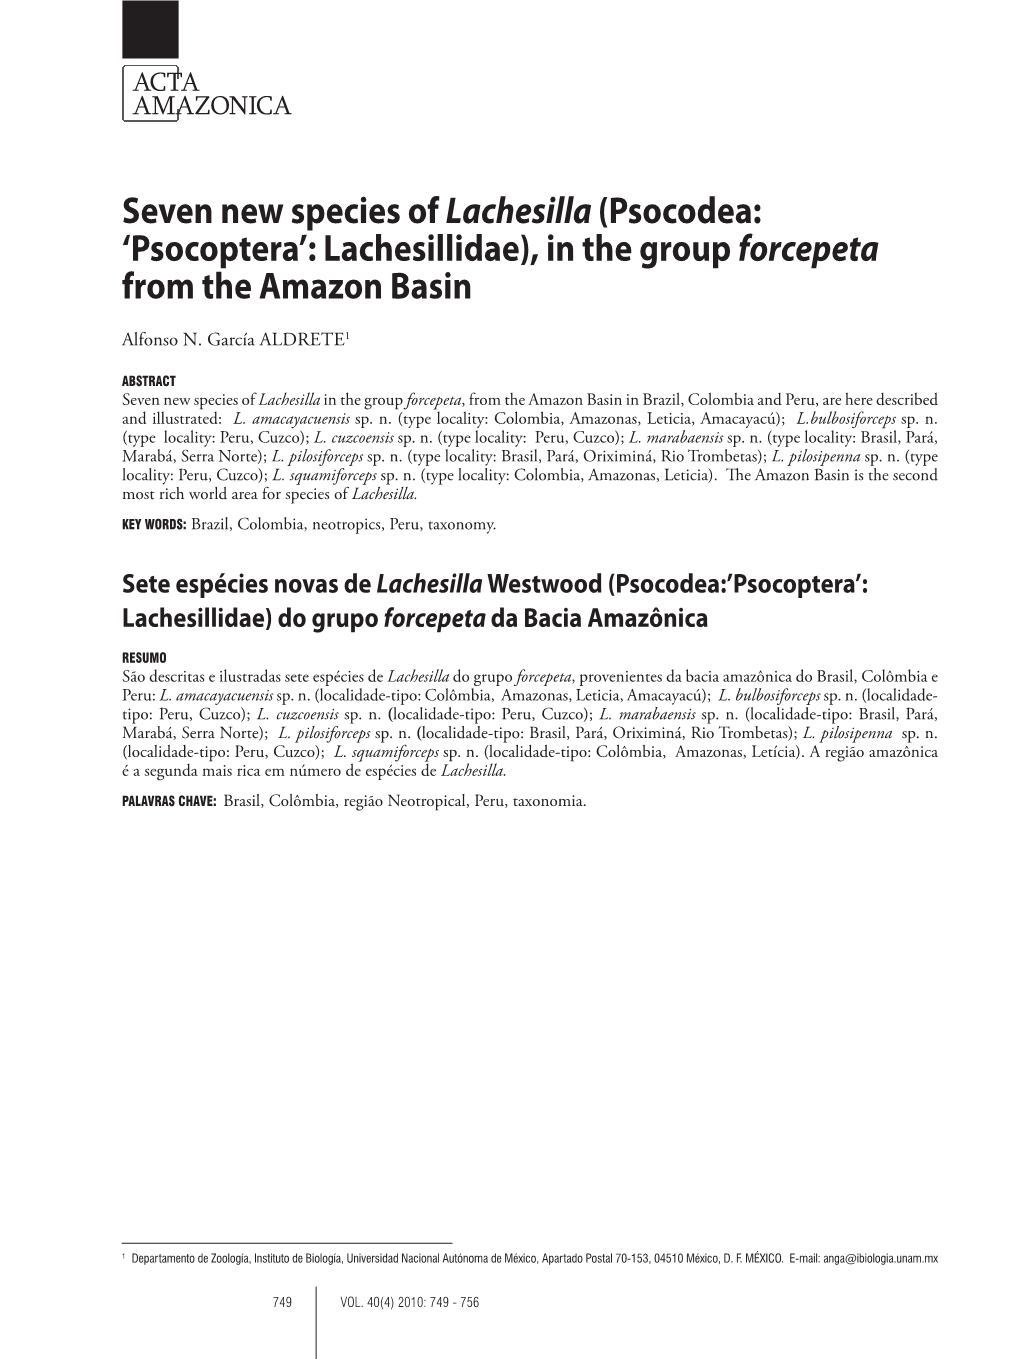 (Psocodea: 'Psocoptera': Lachesillidae